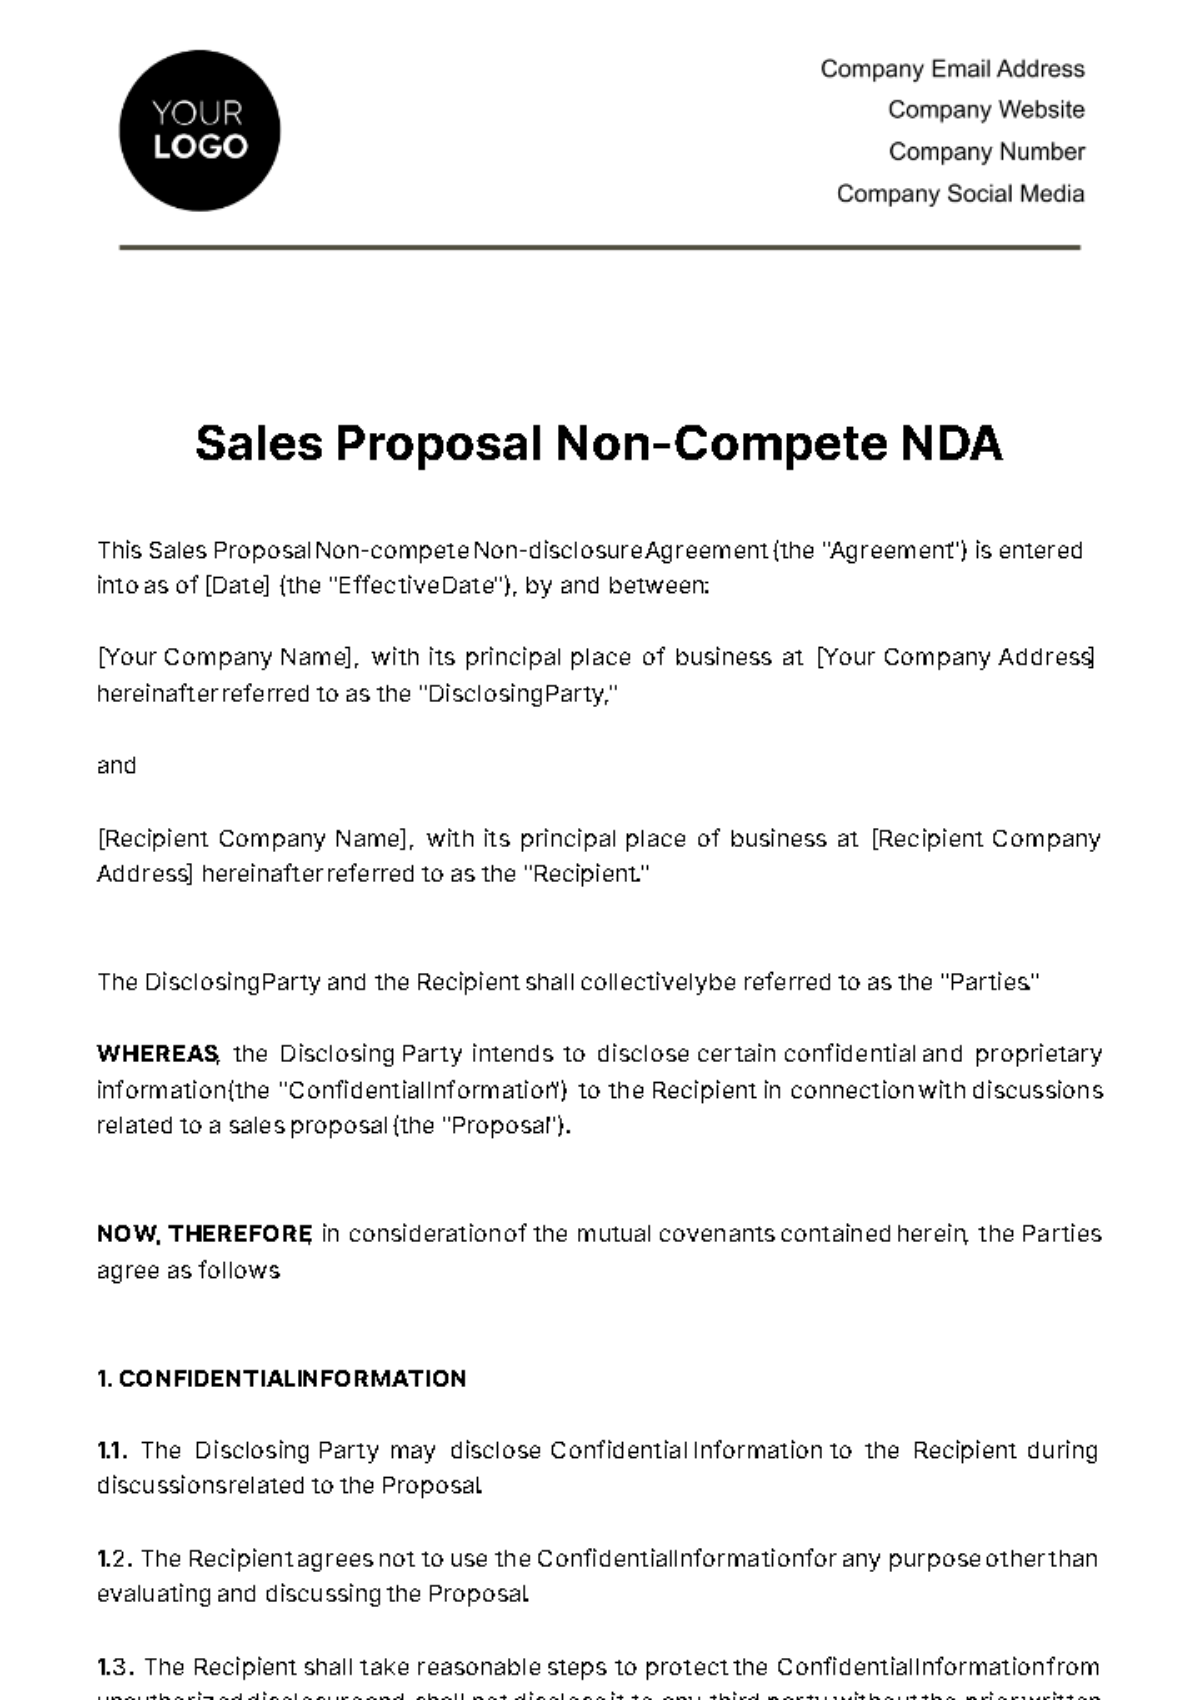 Sales Proposal Non-compete NDA Template